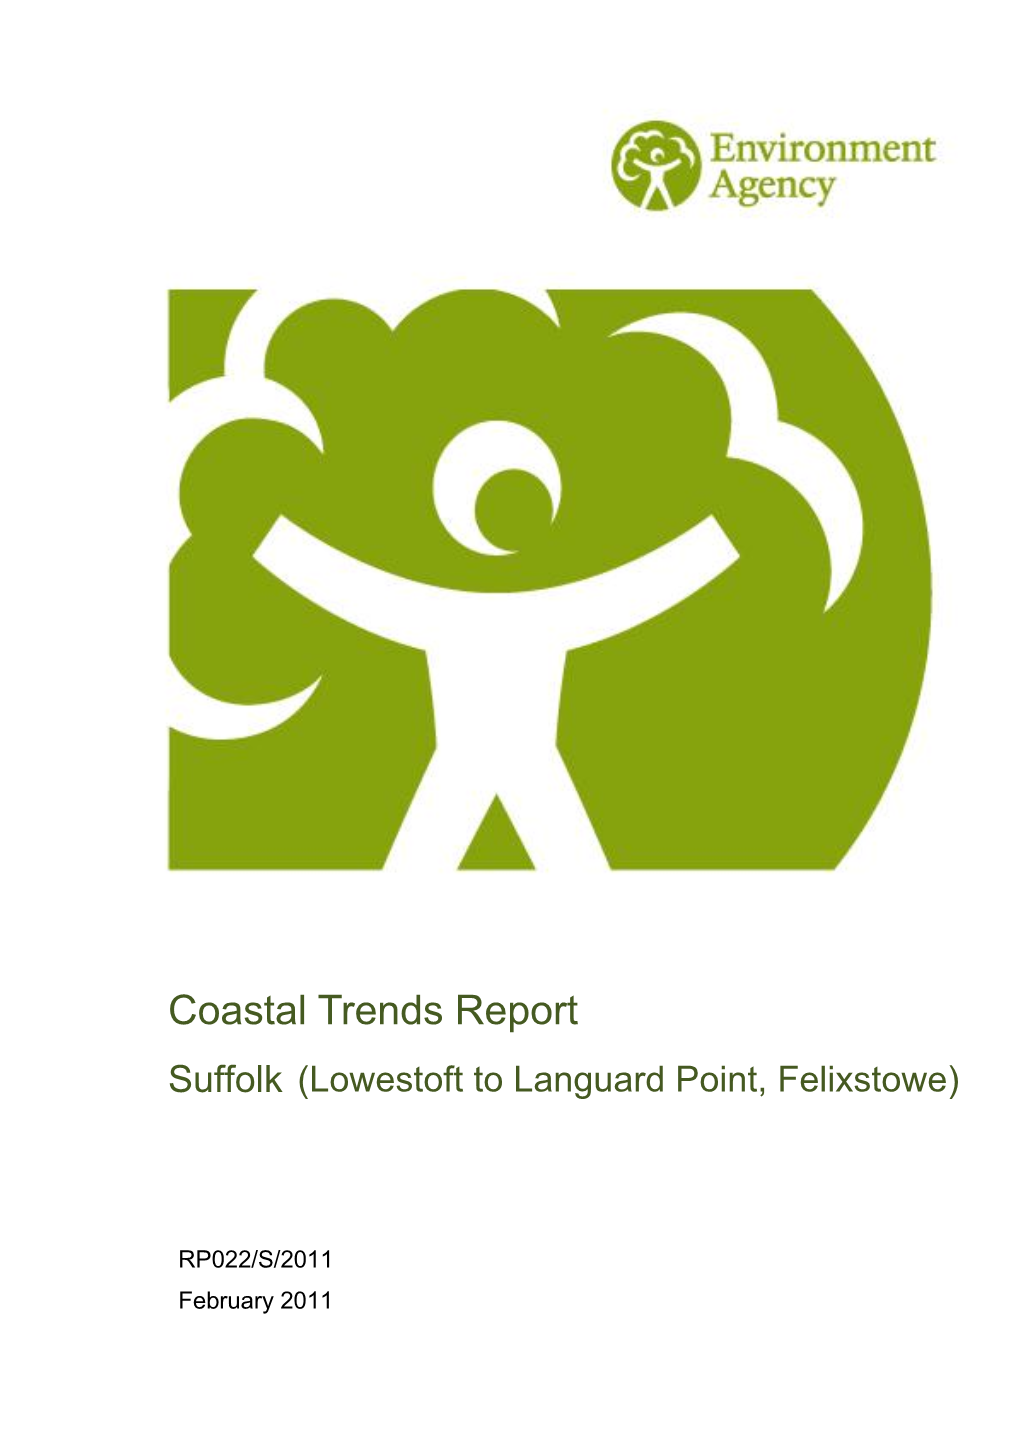 Coastal Trends Report Suffolk (Lowestoft to Languard Point, Felixstowe)